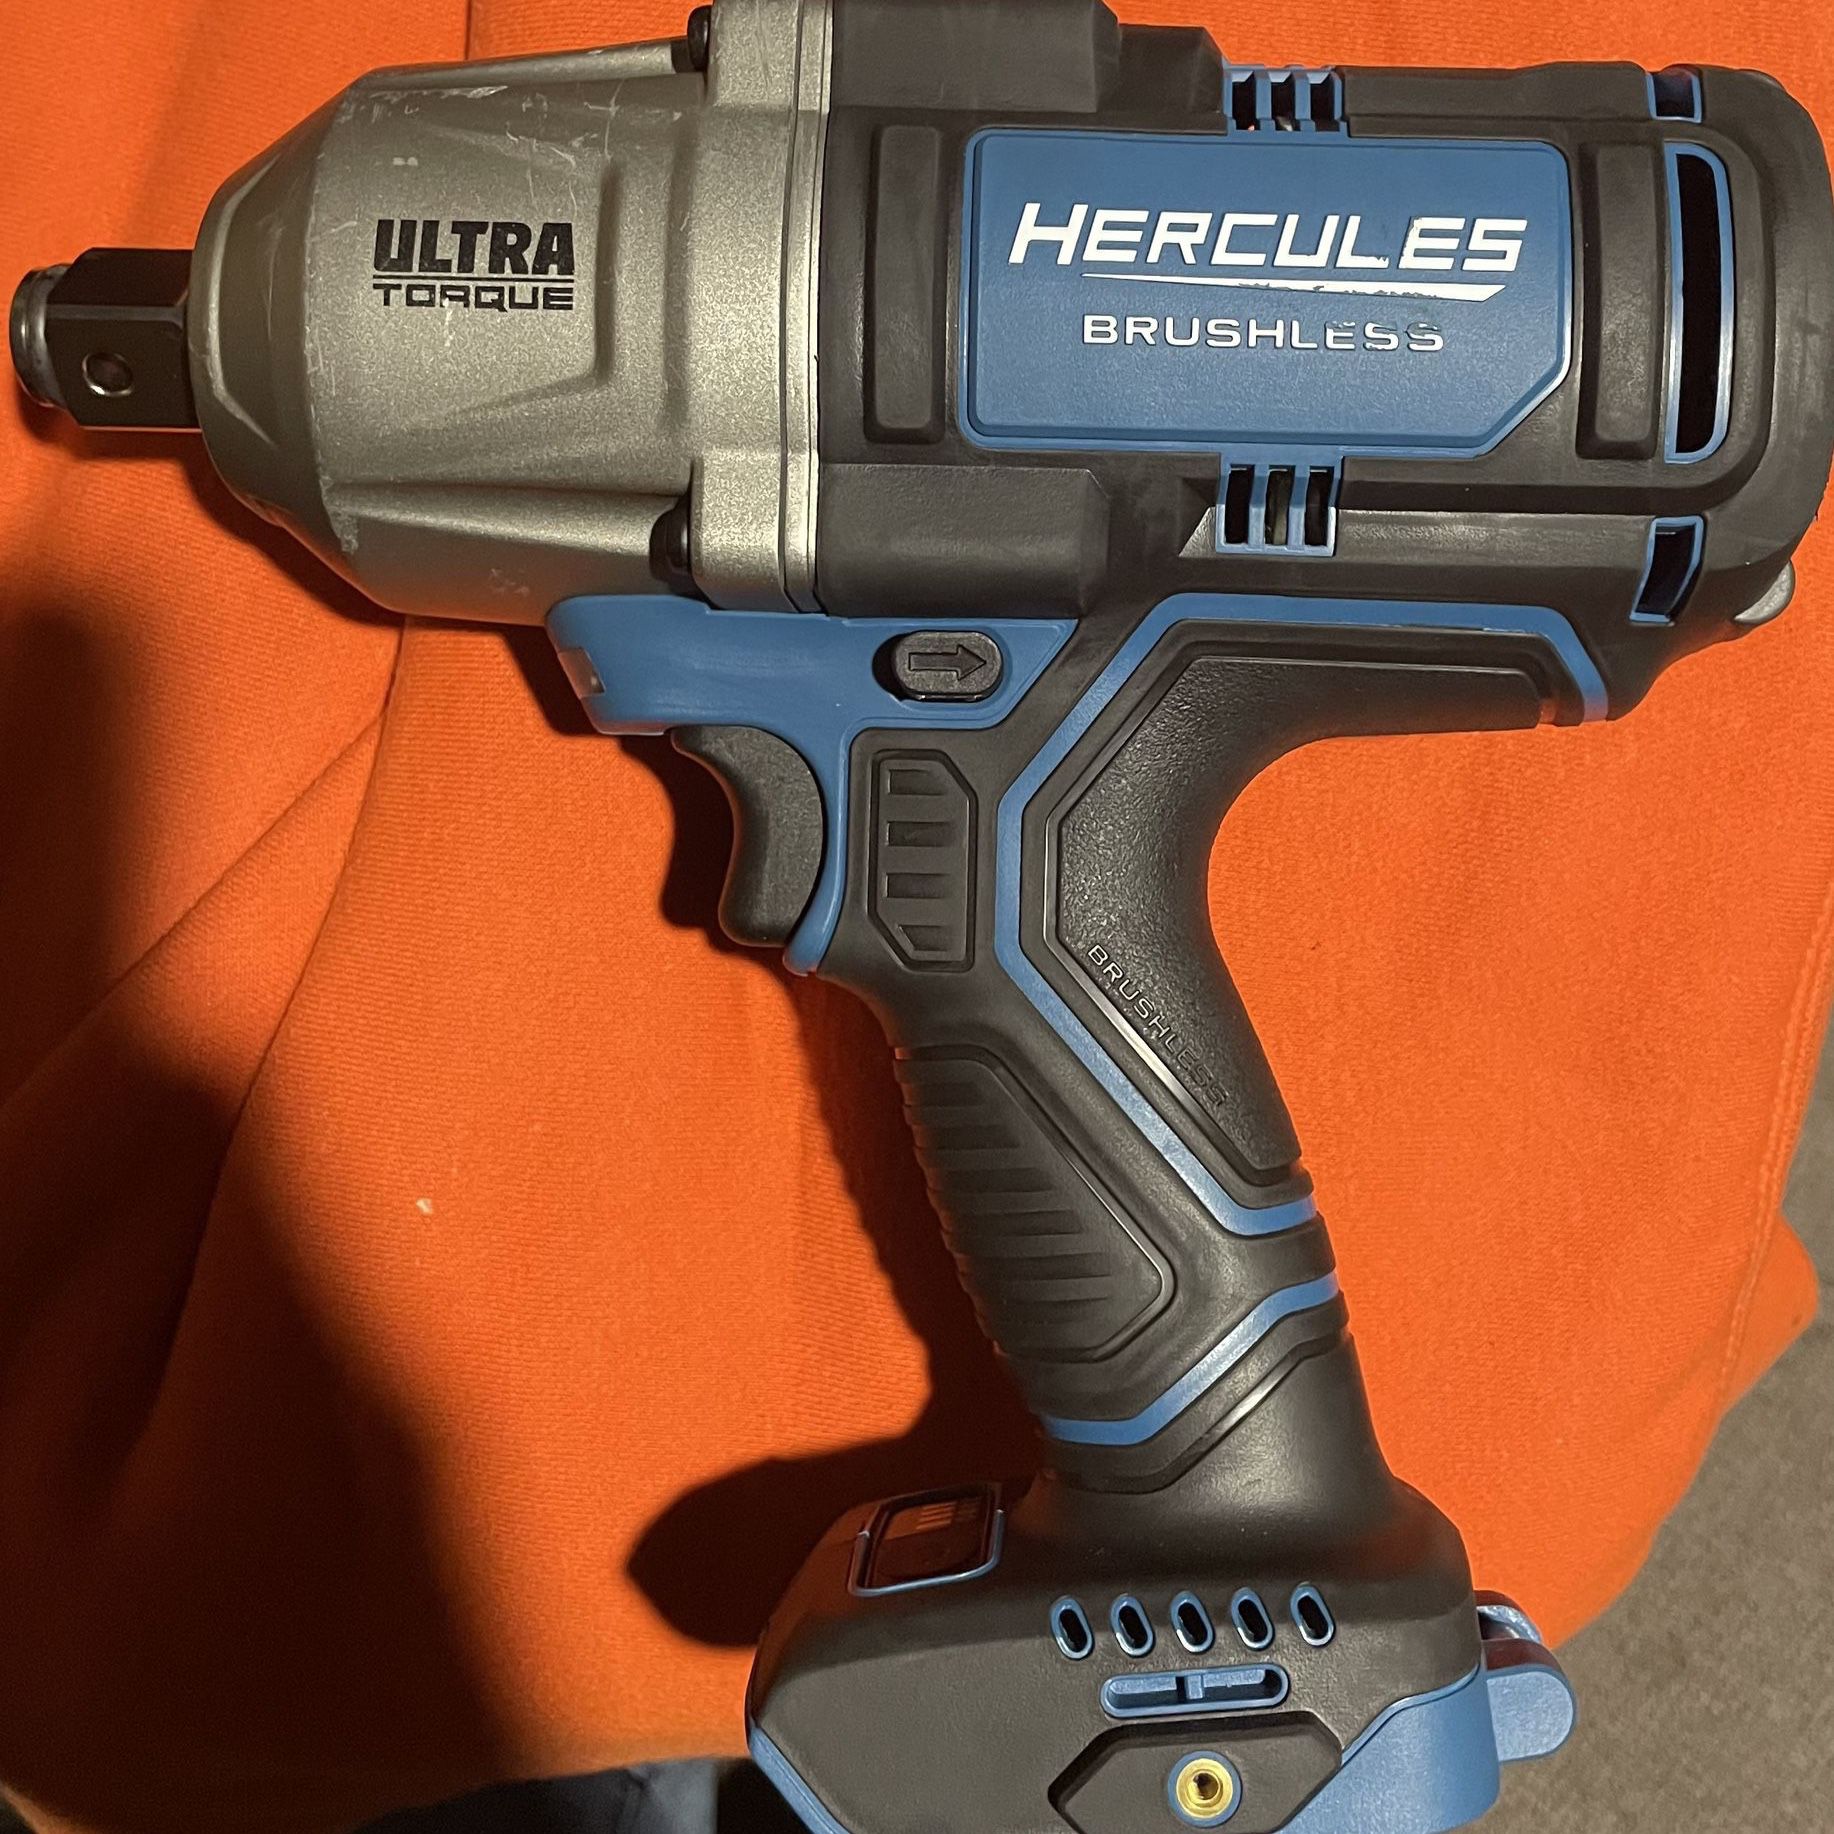 Hercules 20v 3/4” Ultra Torque Impact Wrench